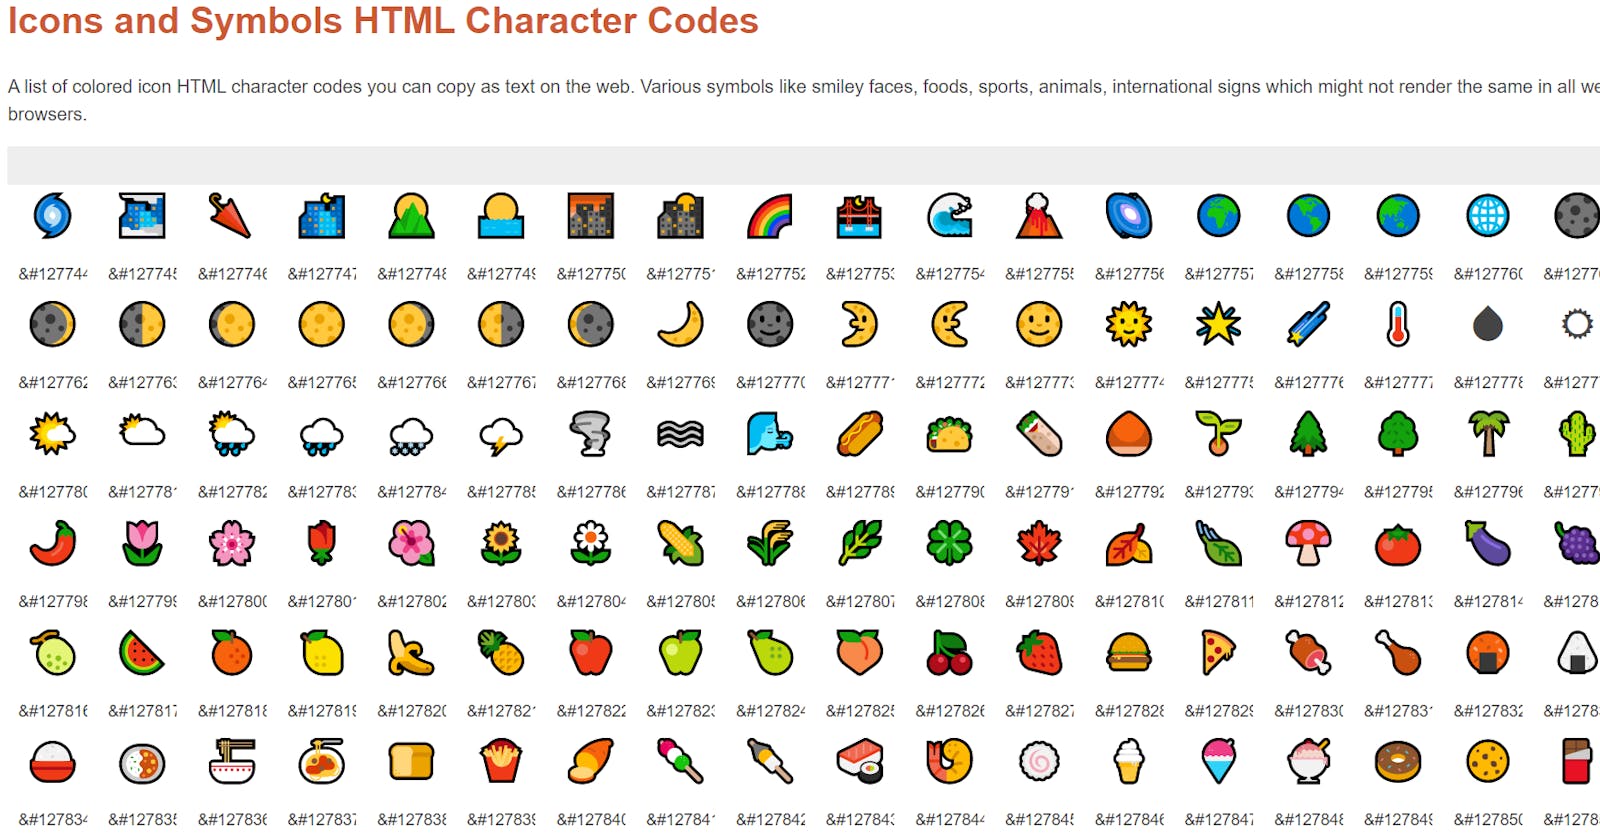 HTML Codes for Fancy Symbols